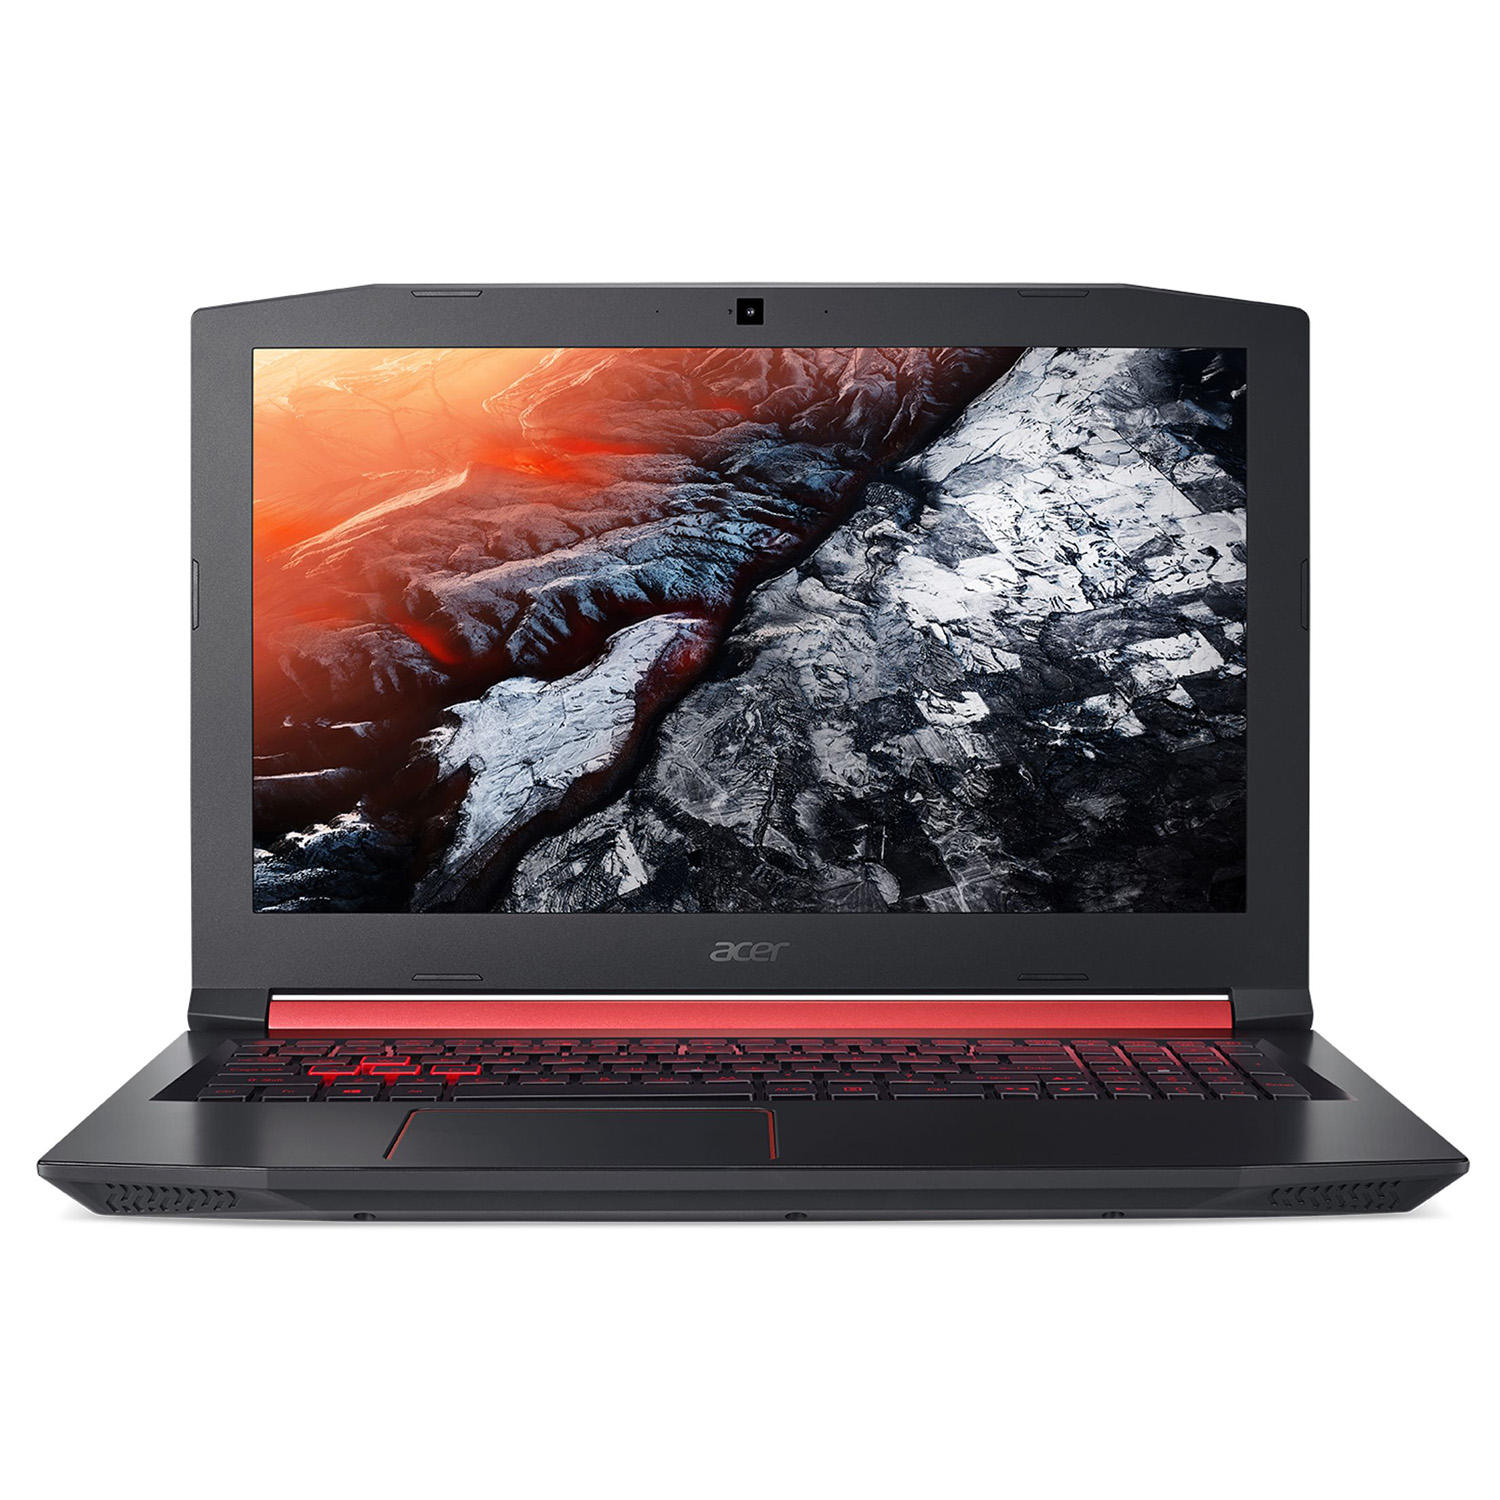 Acer AN51543R1QT Nitro 5 15.6″ Laptop, AMD Ryzen 7 3750H Quad-Core, 8GB RAM, 512GB SSD